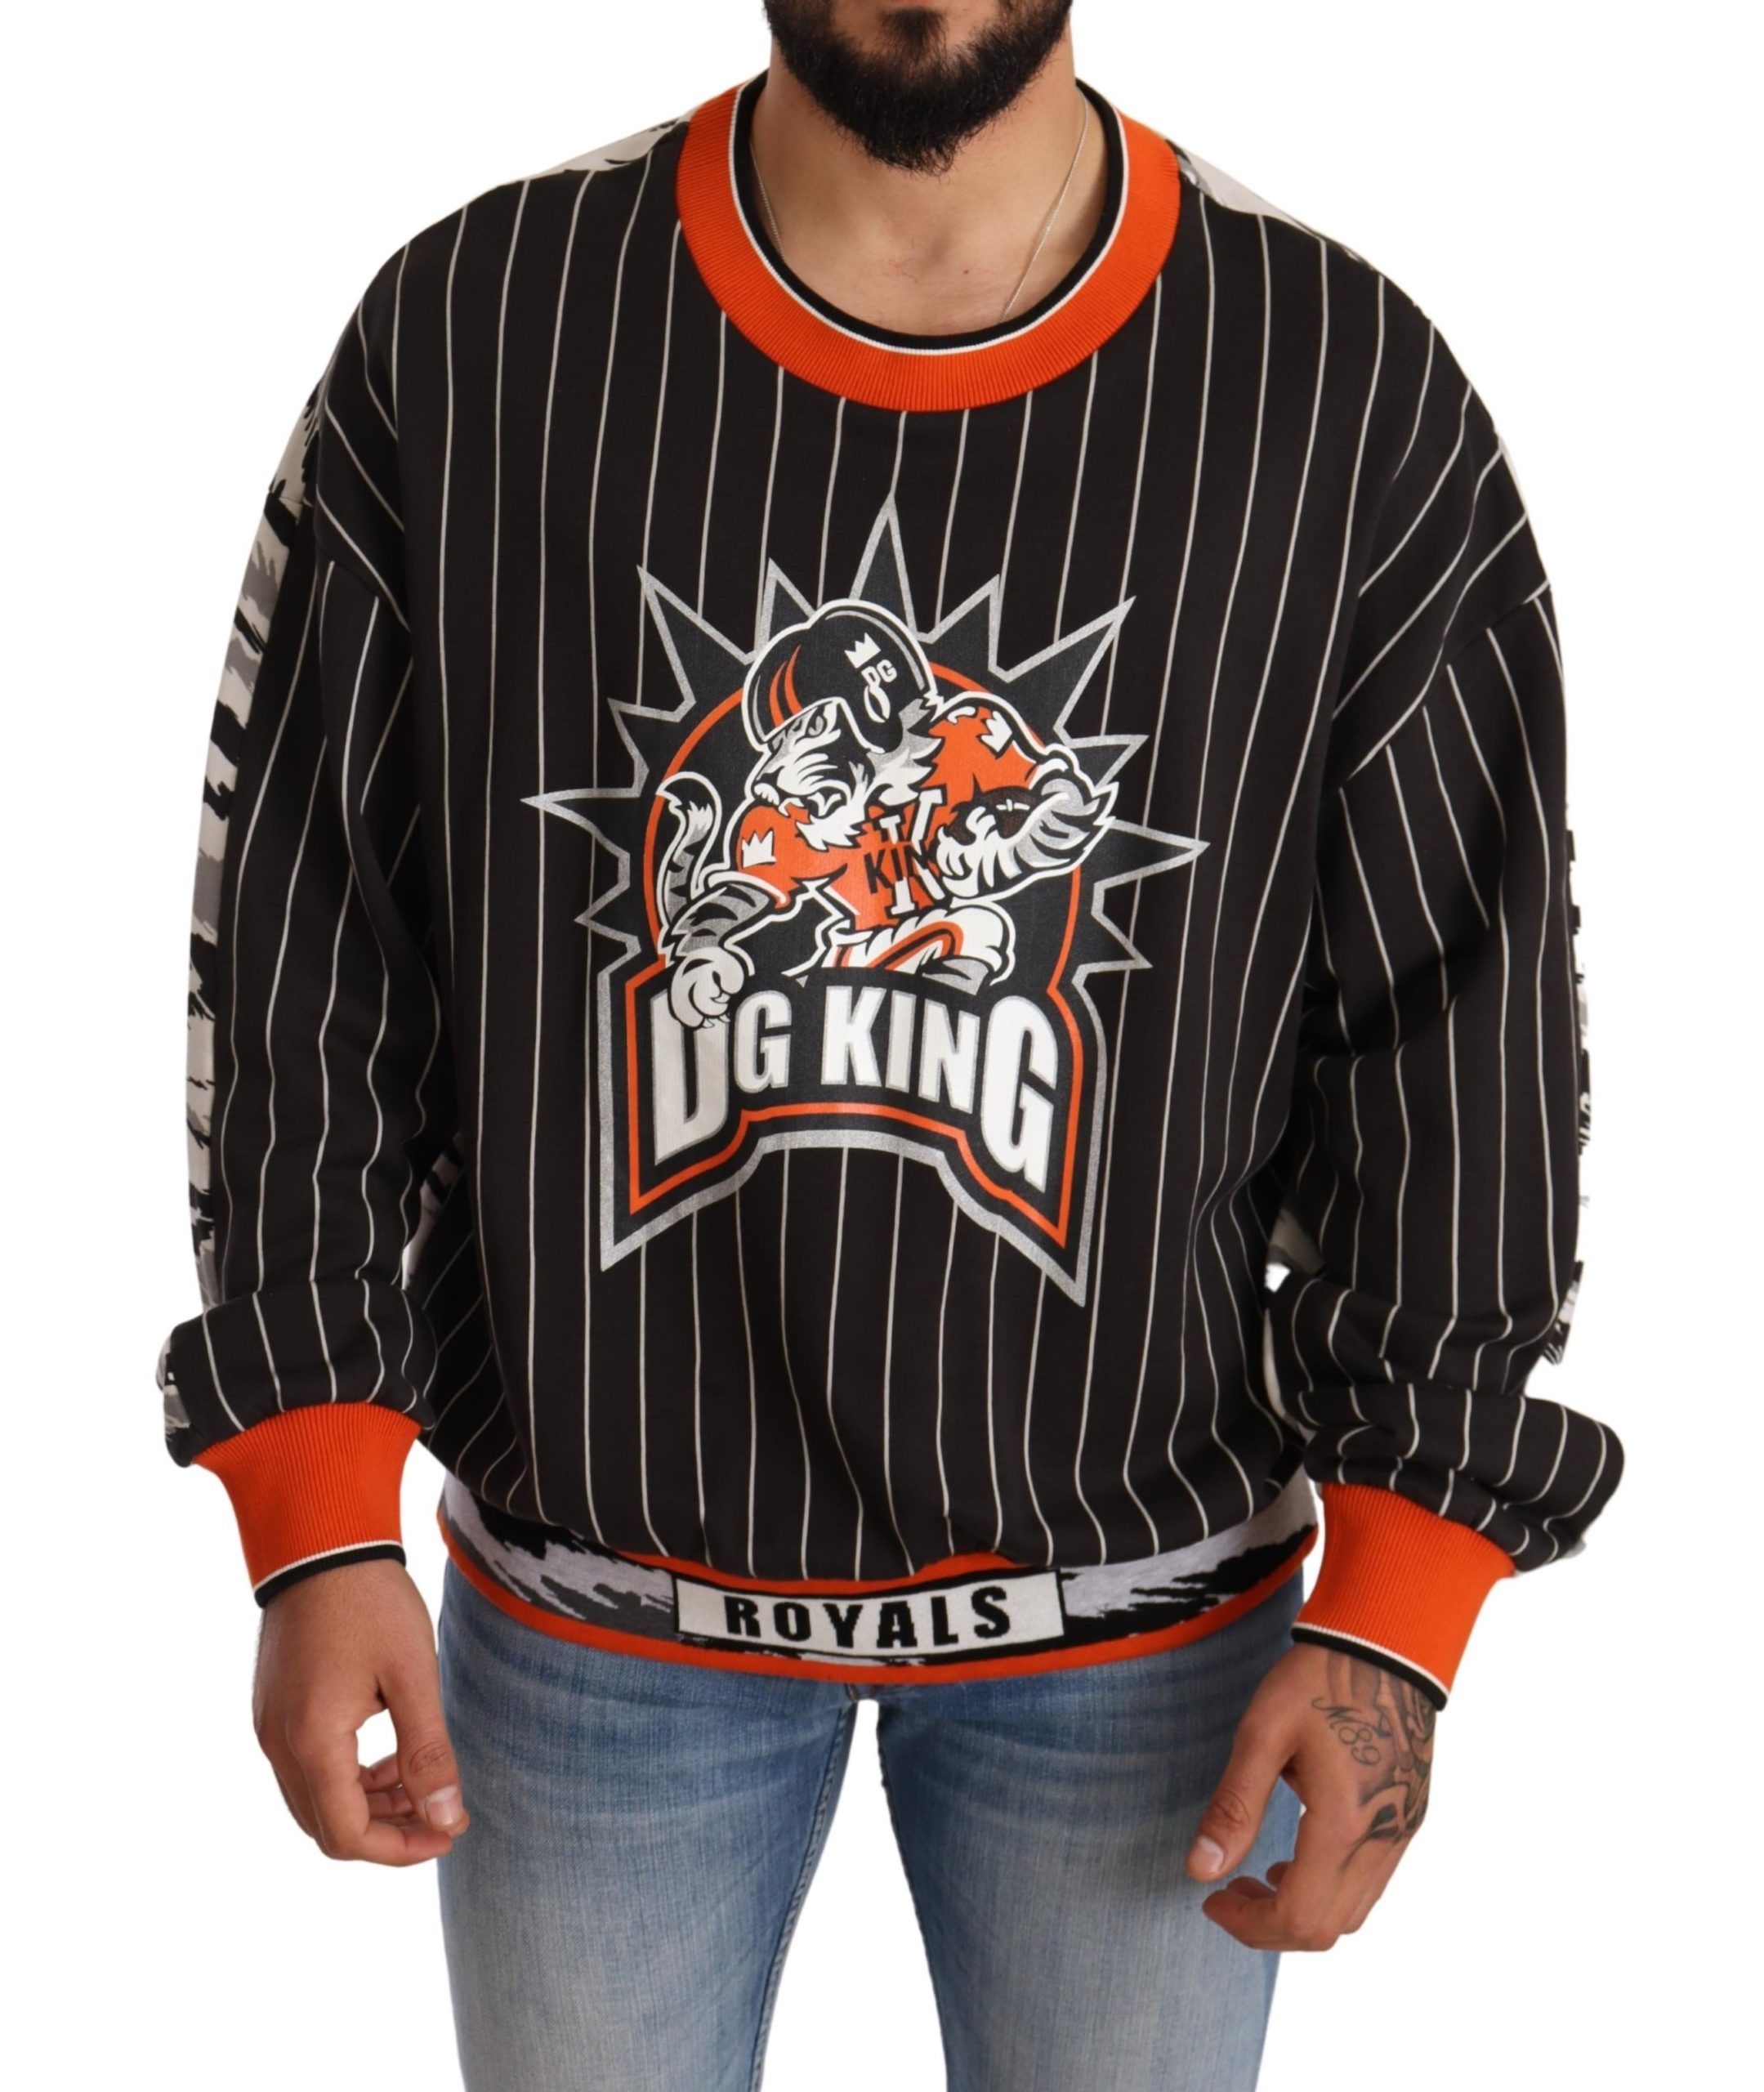 DG King Print Sweater